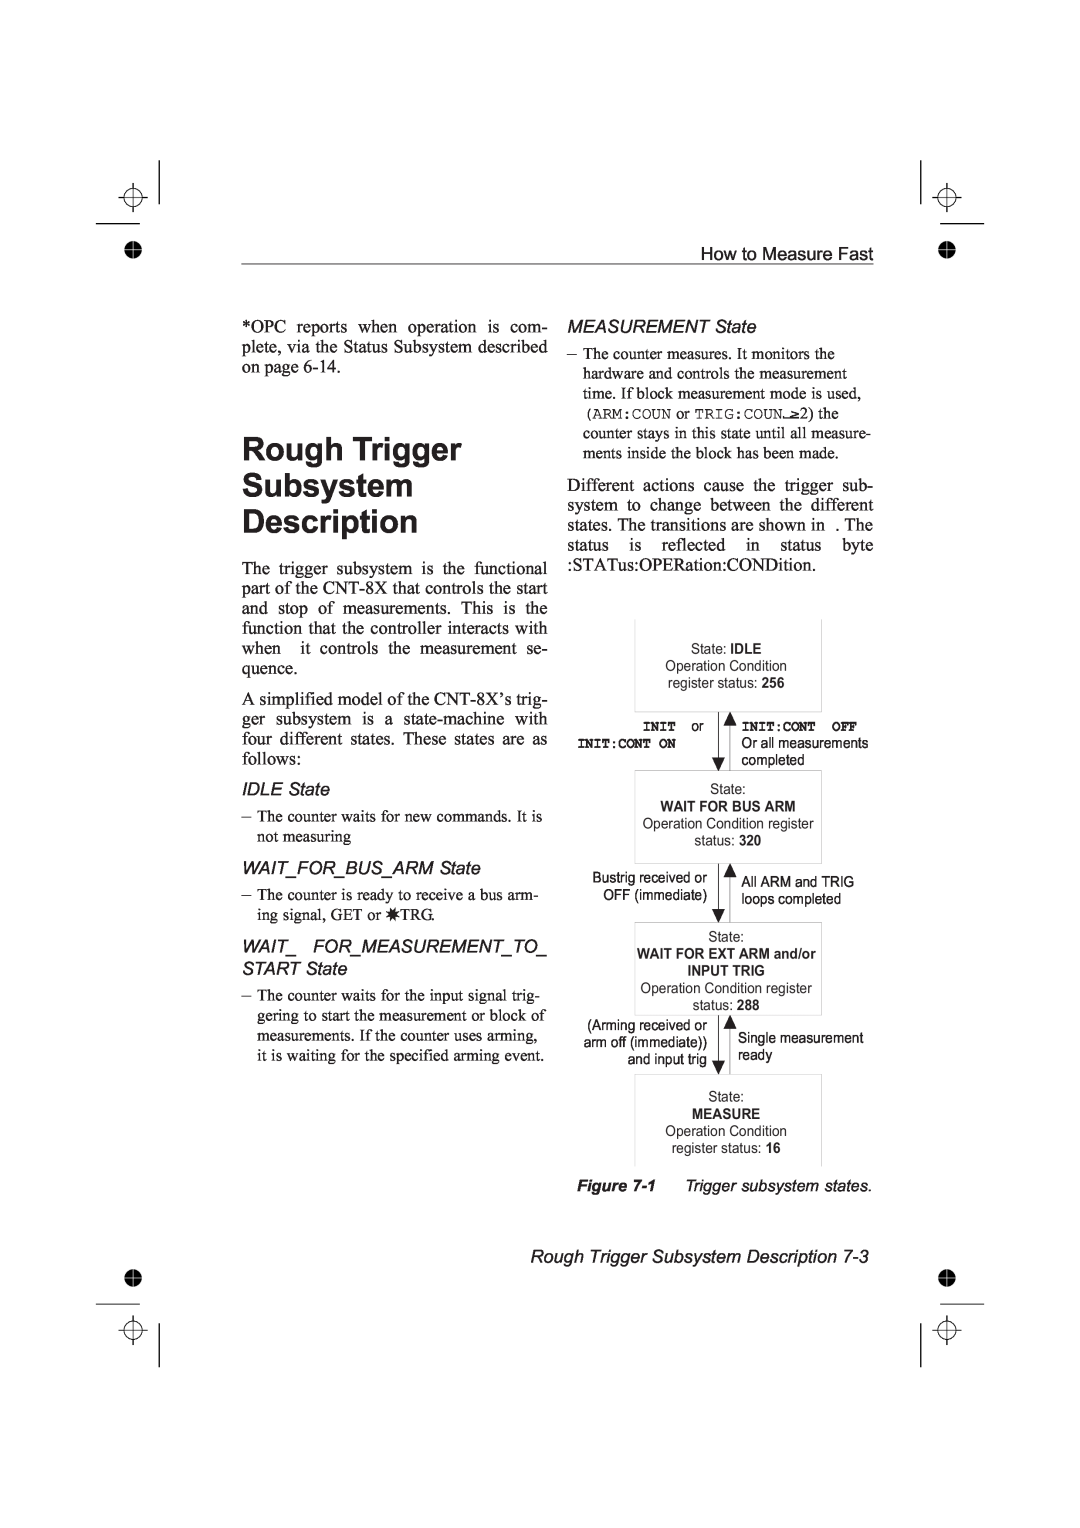 Fluke PM6681 manual Rough Trigger, Subsystem, Description, MEASUREMENT State, IDLE State, WAITFORBUSARM State, START State 